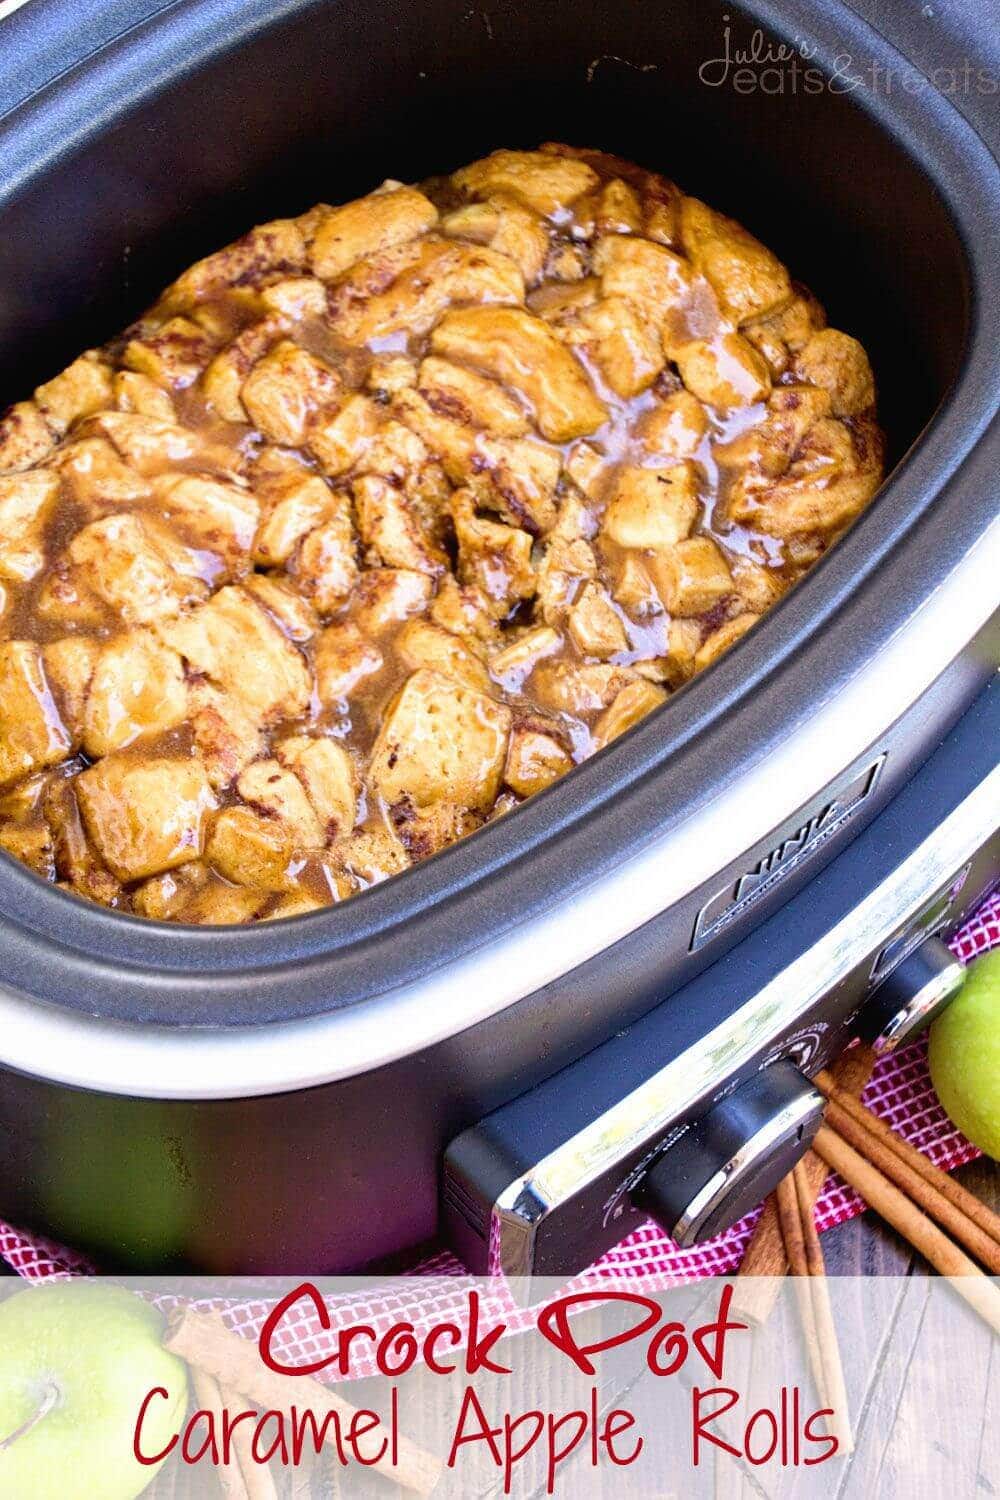 Crock Pot Caramel Apple Rolls Recipe ~ Start with Store Bought Caramel Rolls in the Crock Pot with Apples and Smothered in Caramel Sauce!